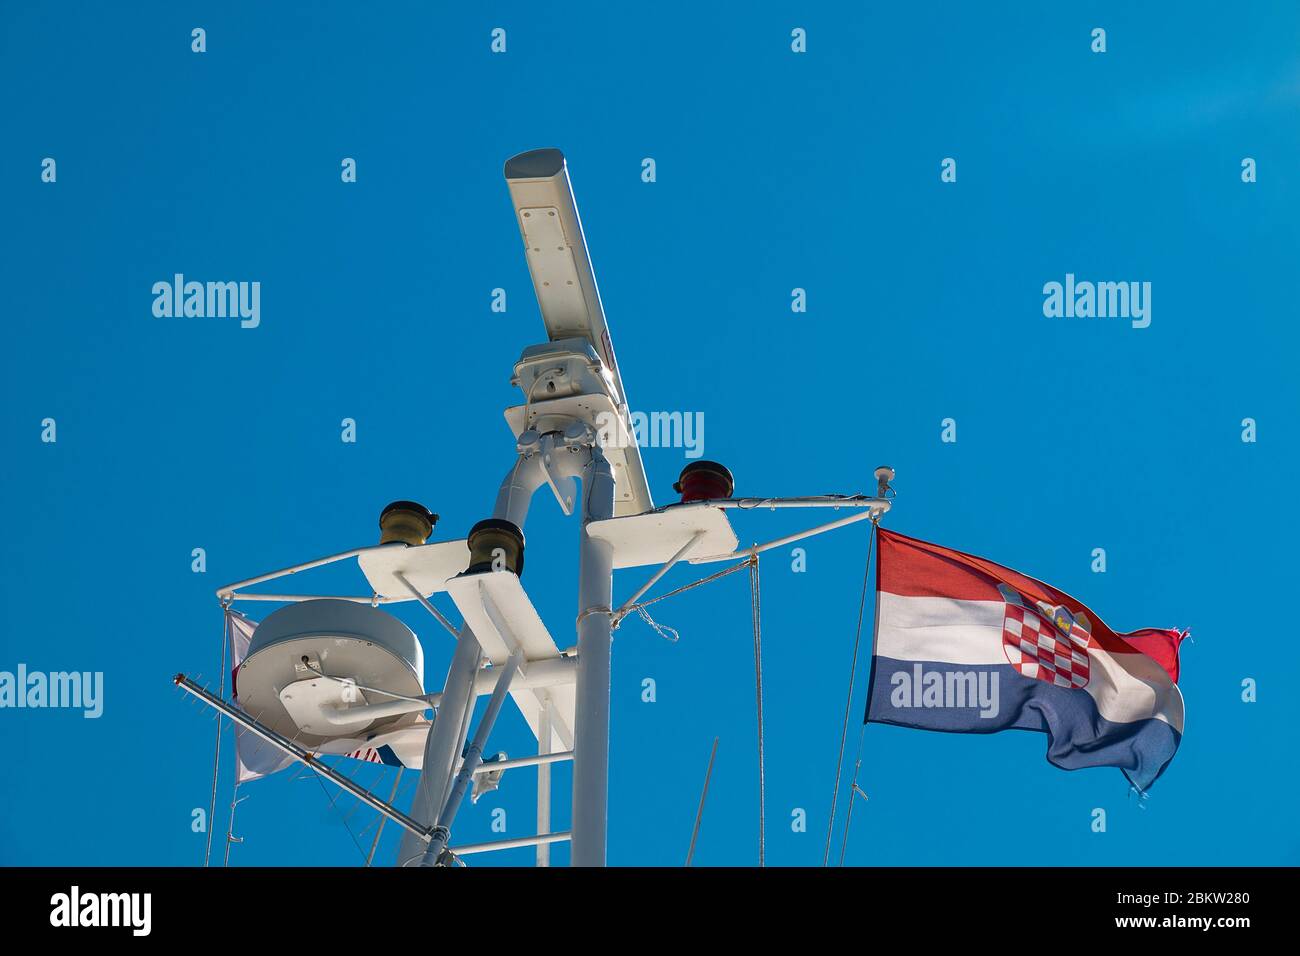 Croatian flag waving in smal winnd on the blue sky Stock Photo